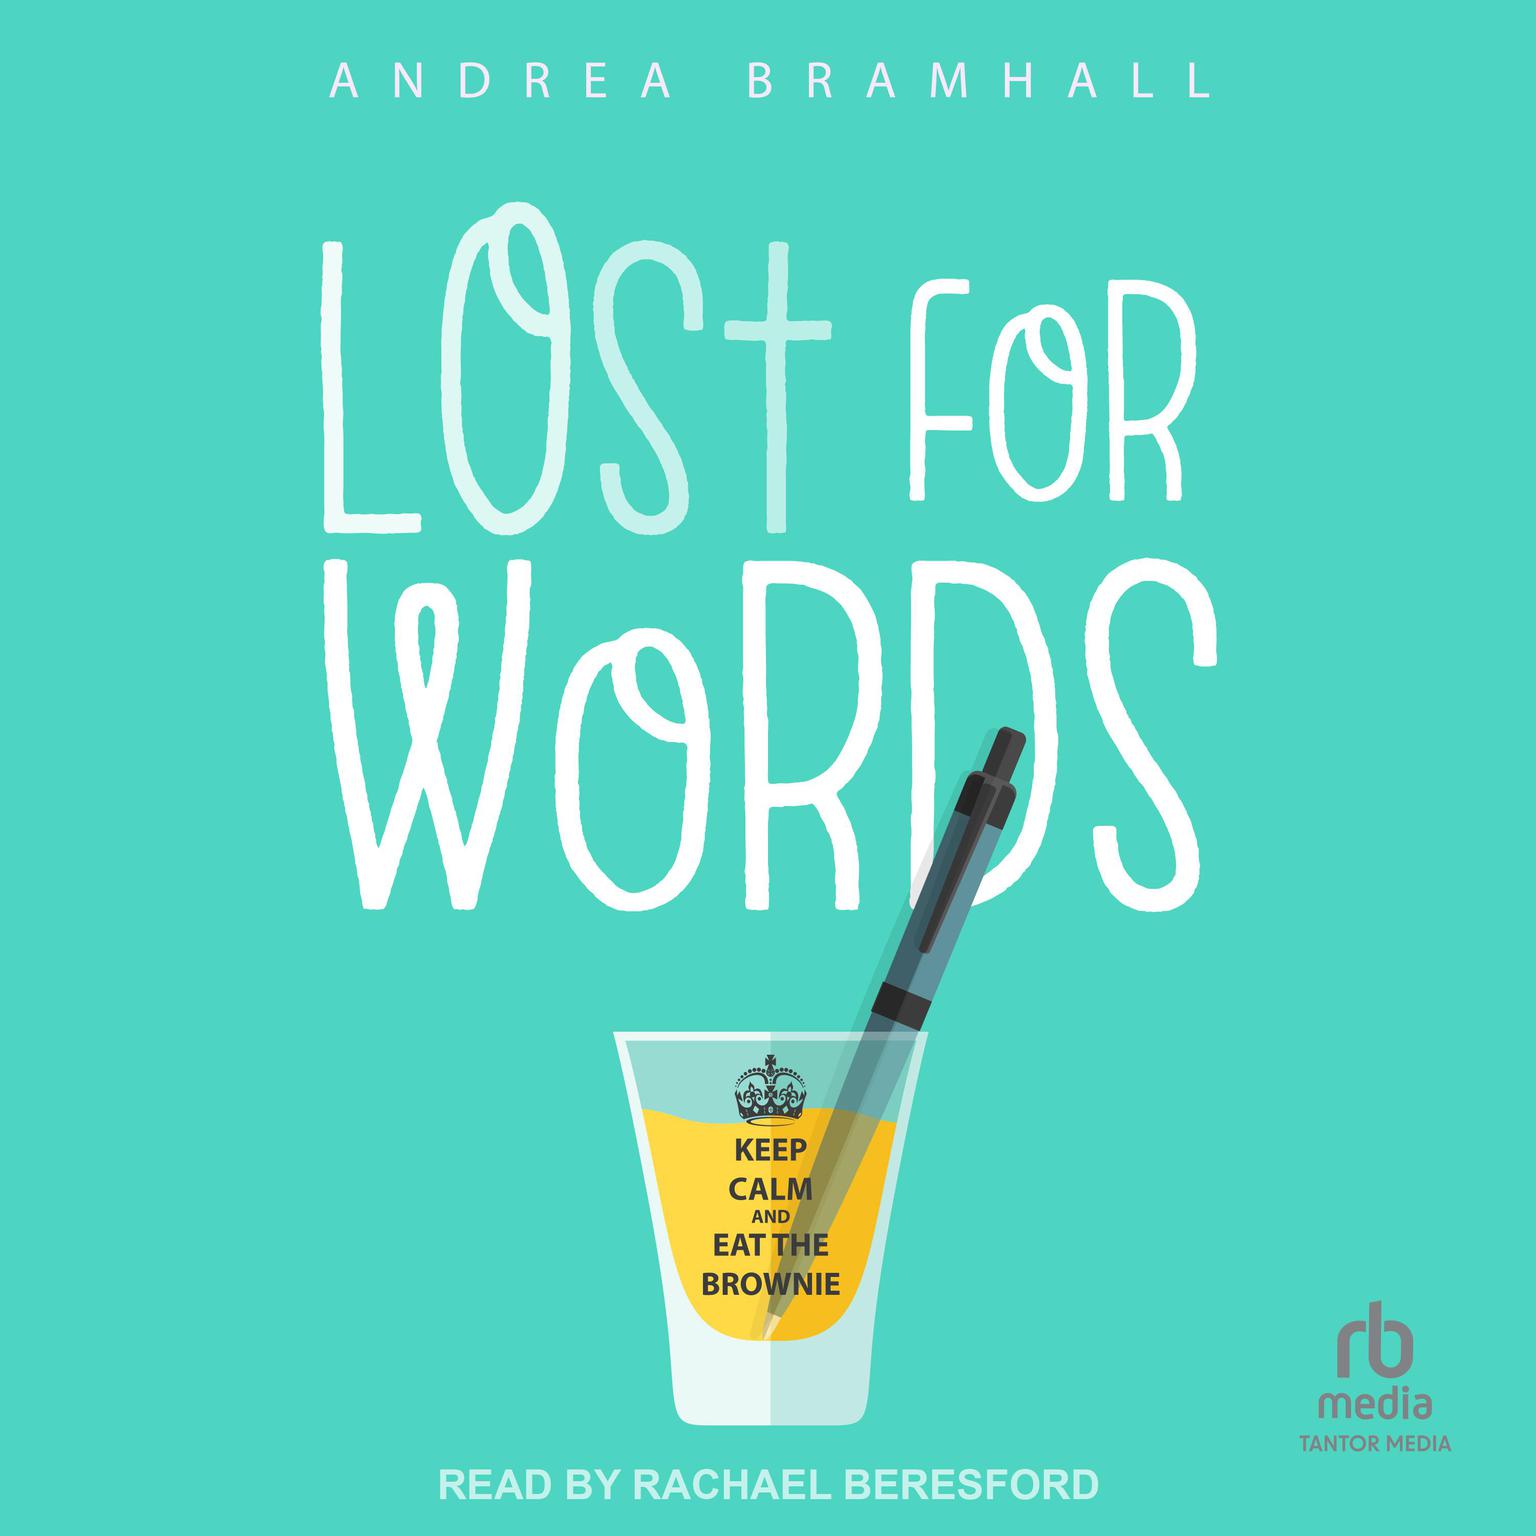 Andrea Bramhall, Rachael Beresford: Lost for Words (AudiobookFormat, 2022, Tantor Audio)